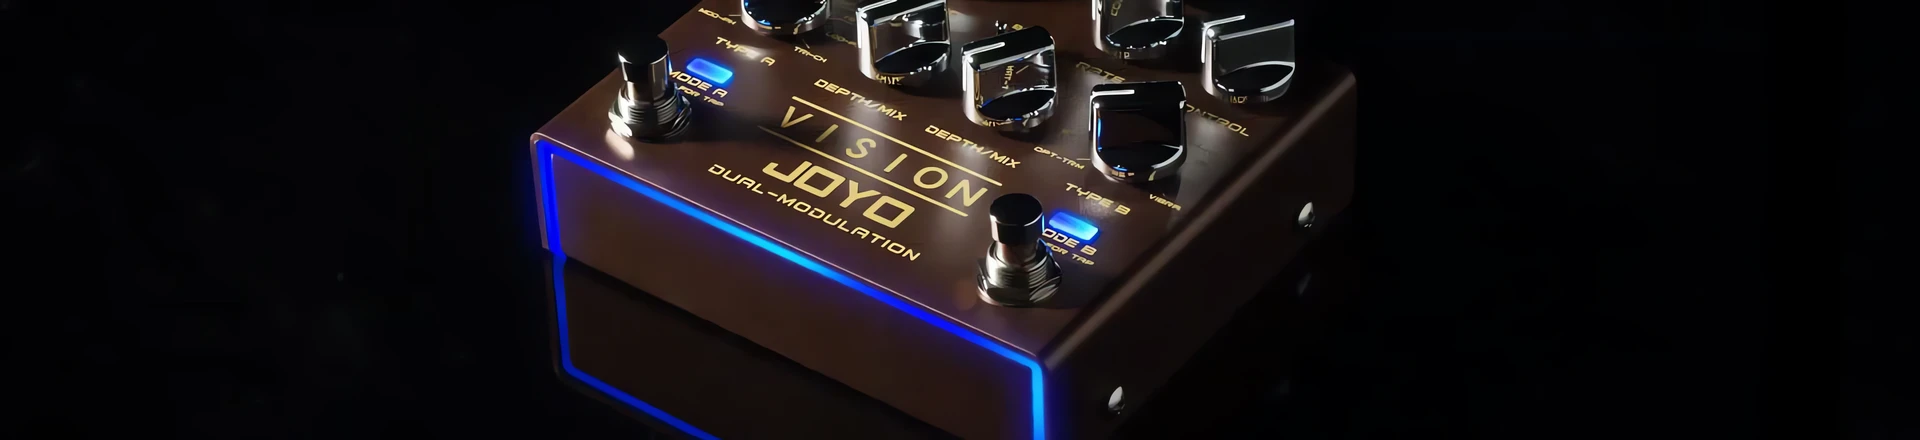 NAMM'19: Joyo R-09 Vision - Podwójna wizja modulacji